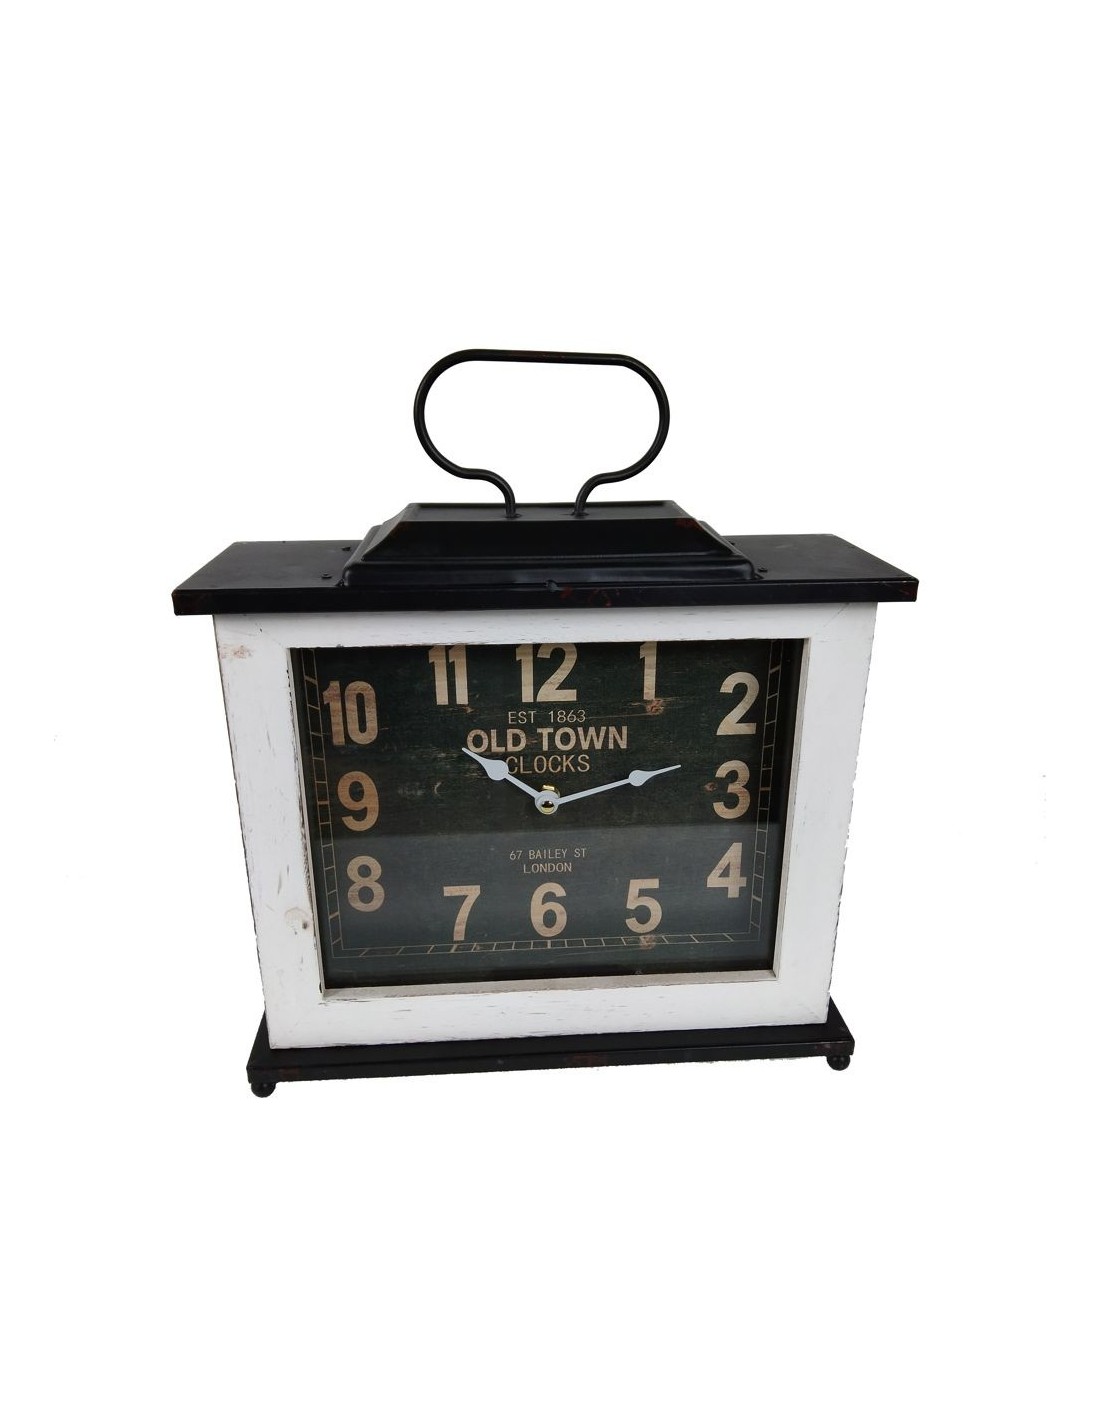 Horloge de Bureau Off Center de Studio Lorier en vente sur Pamono